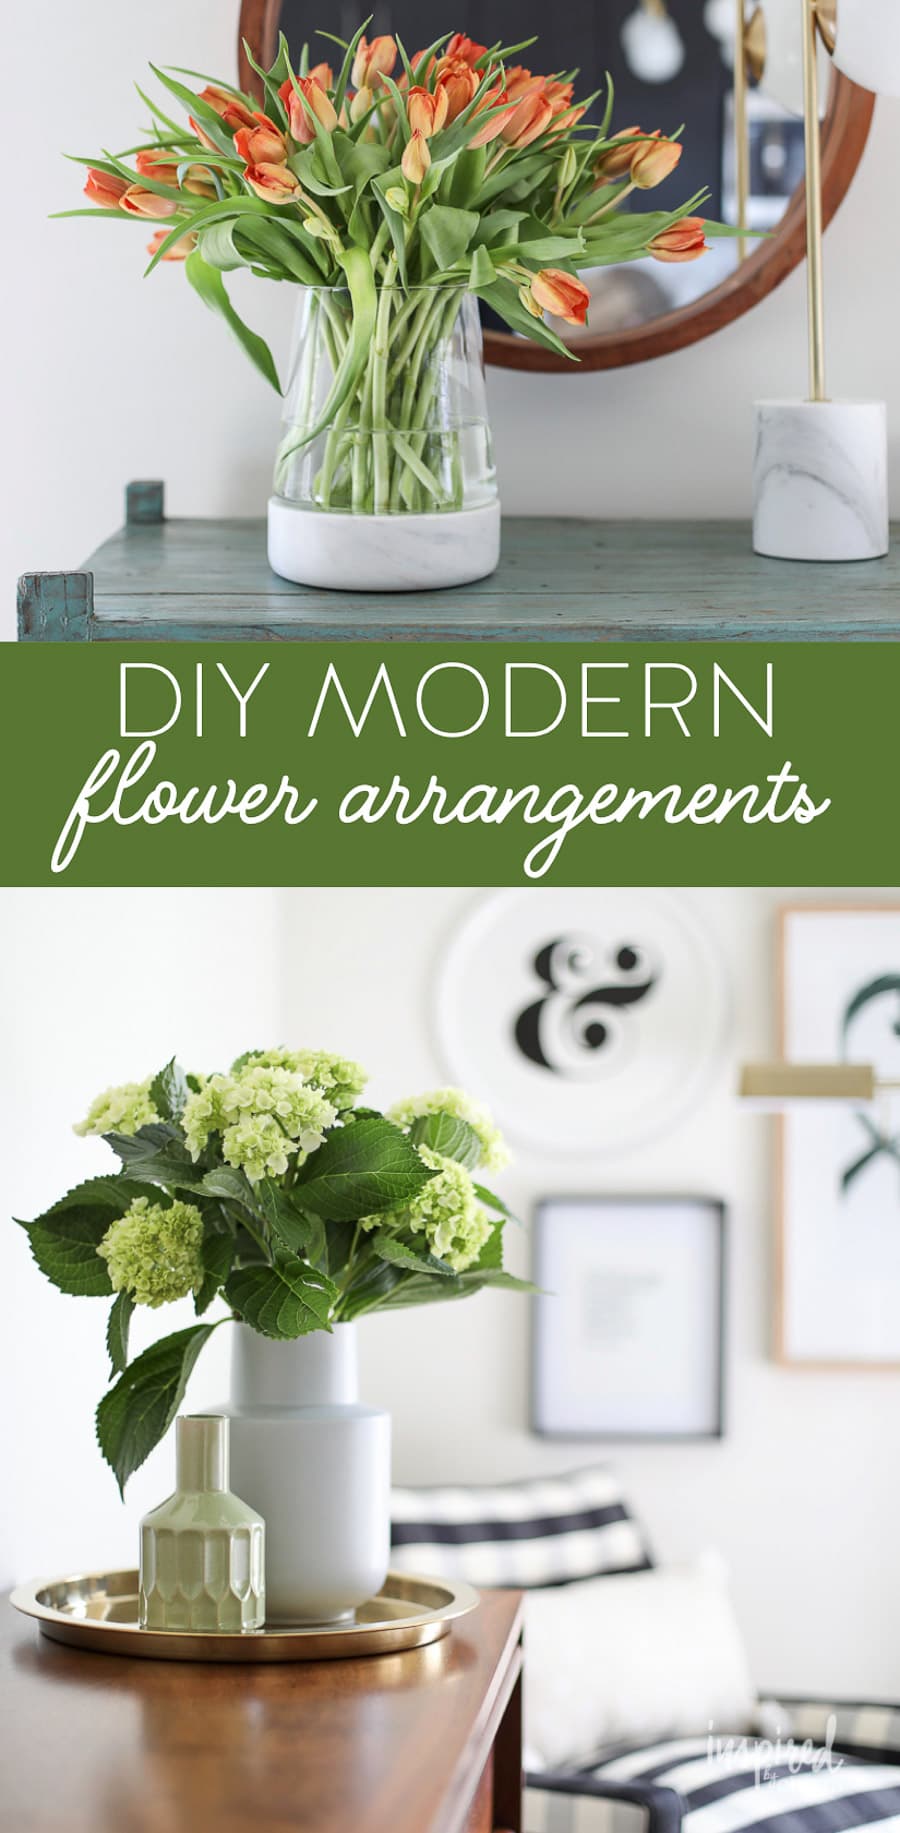 How to Create DIY Modern Flower Arrangements at Home #flowers #arrangement #arrange #bouquet #tulips #hydrangea #diy